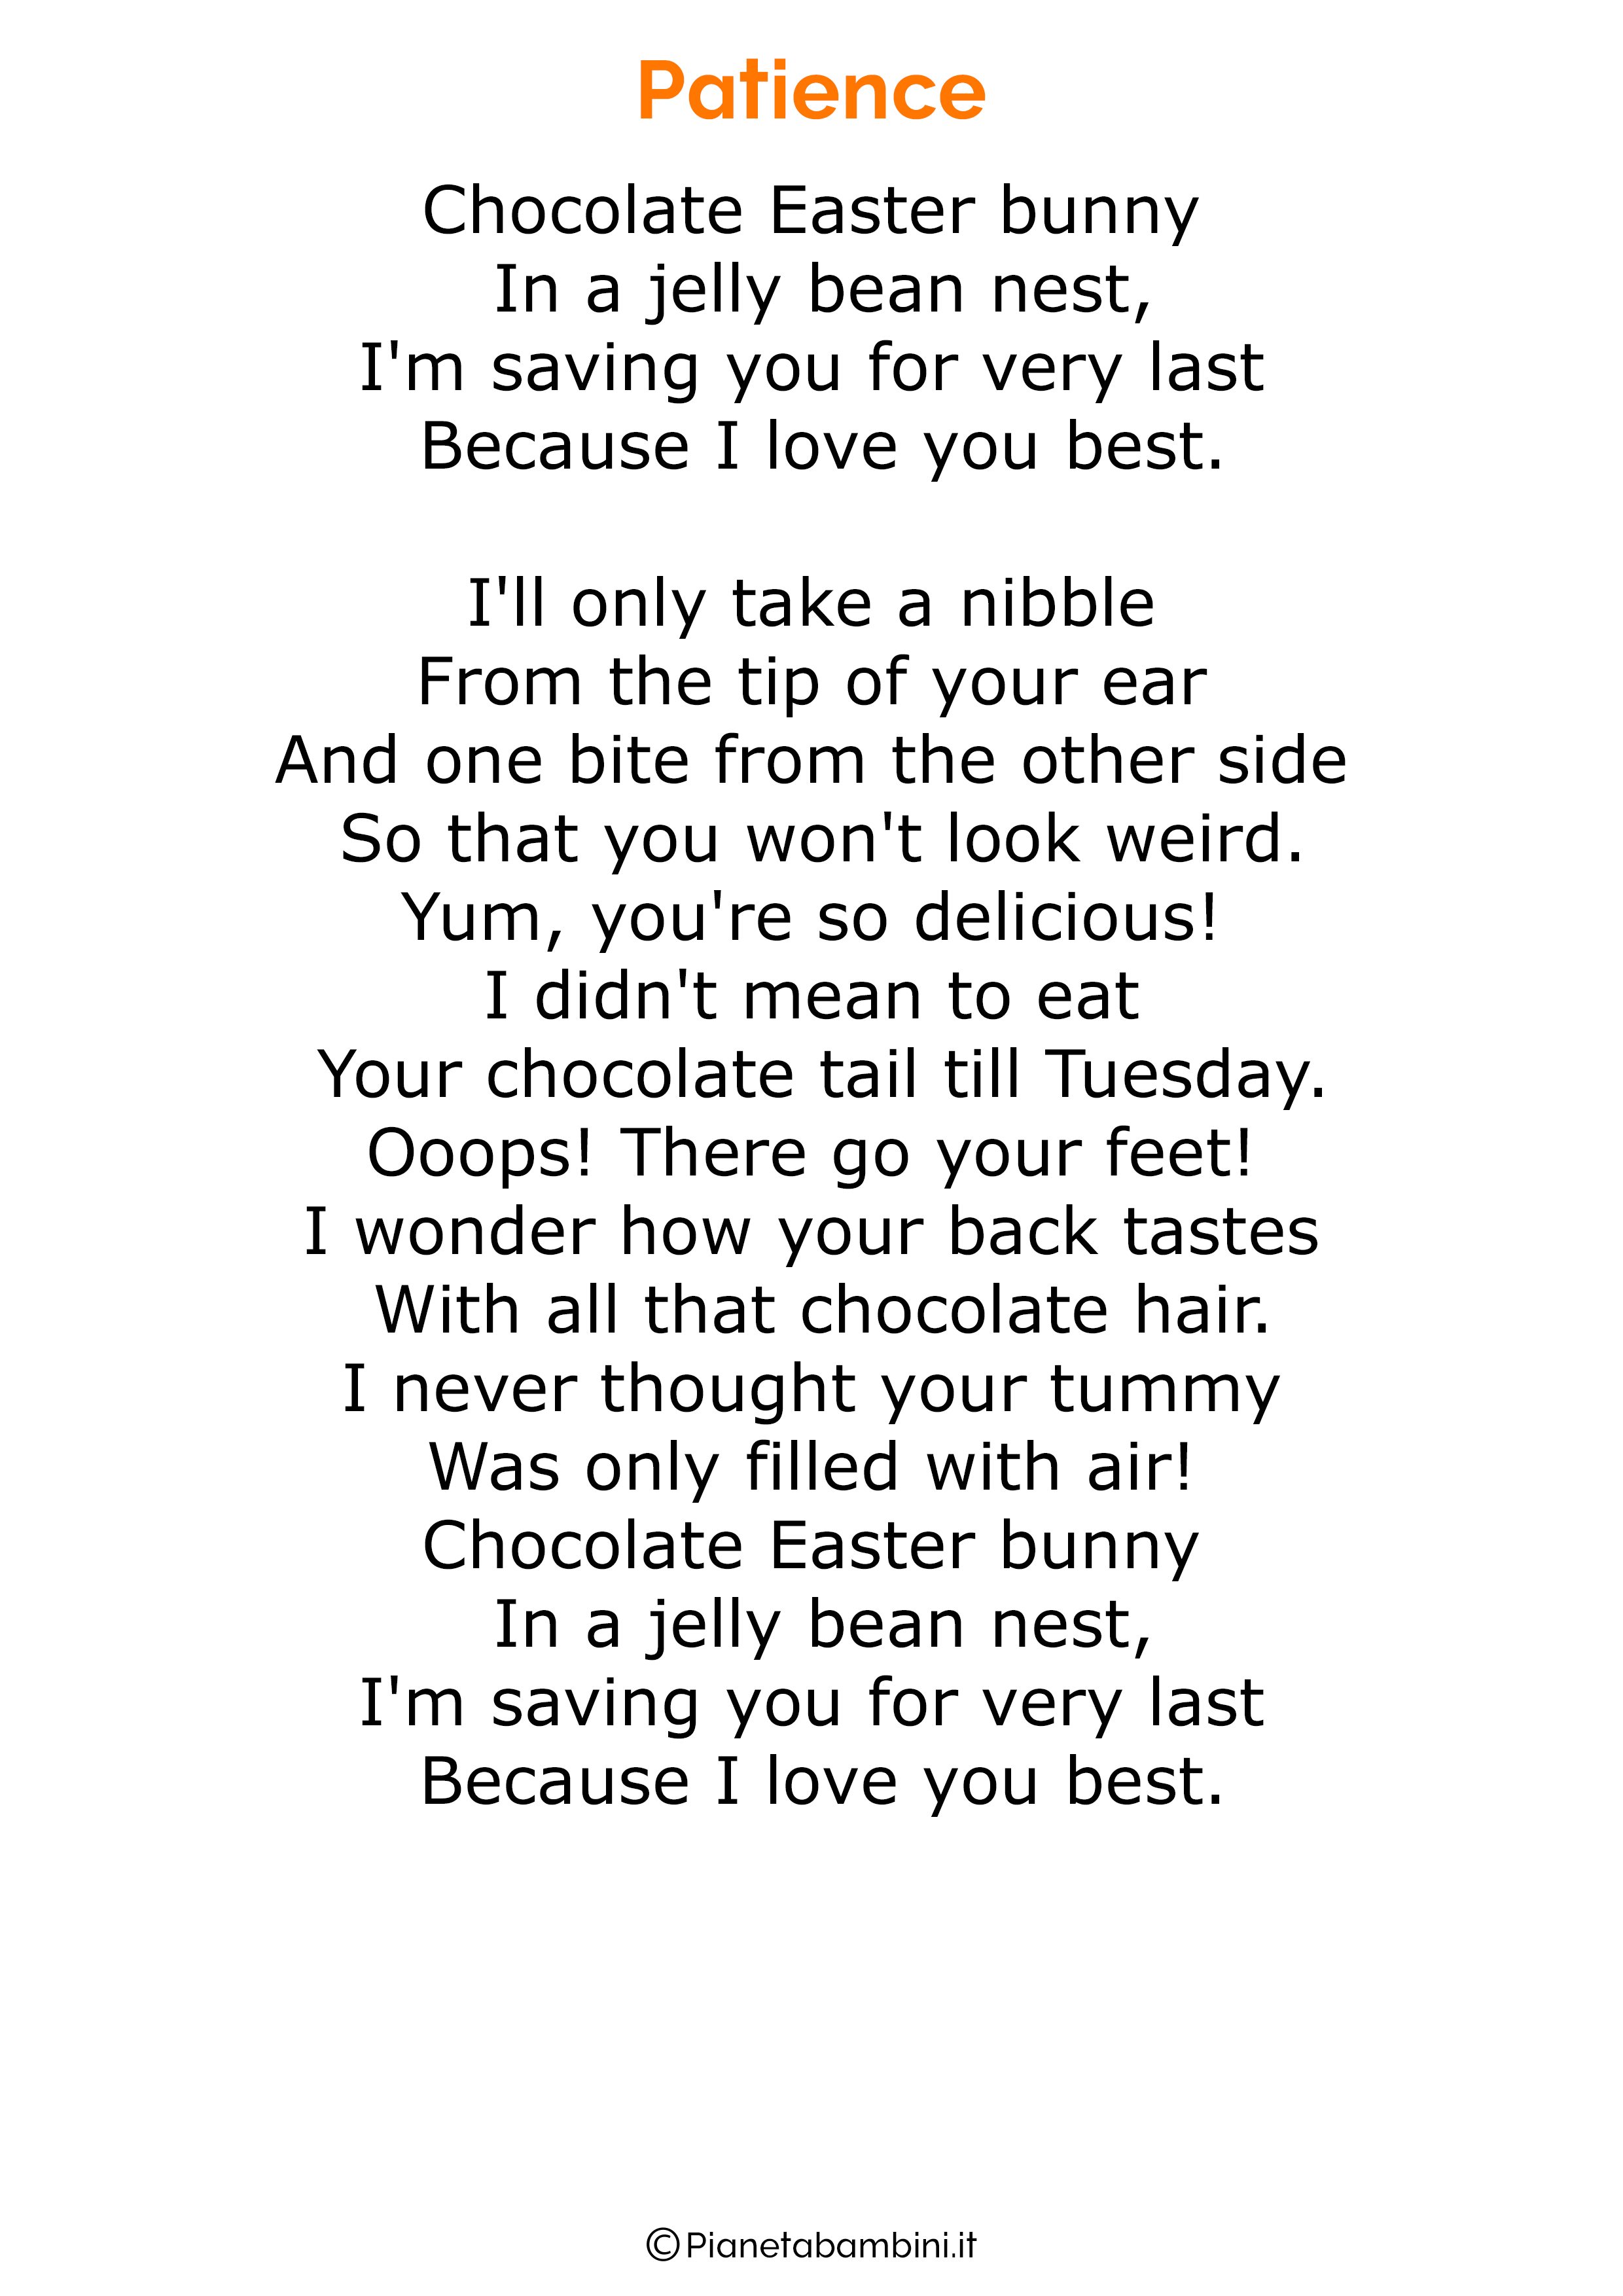 Poesie di Pasqua in inglese per bambini 07